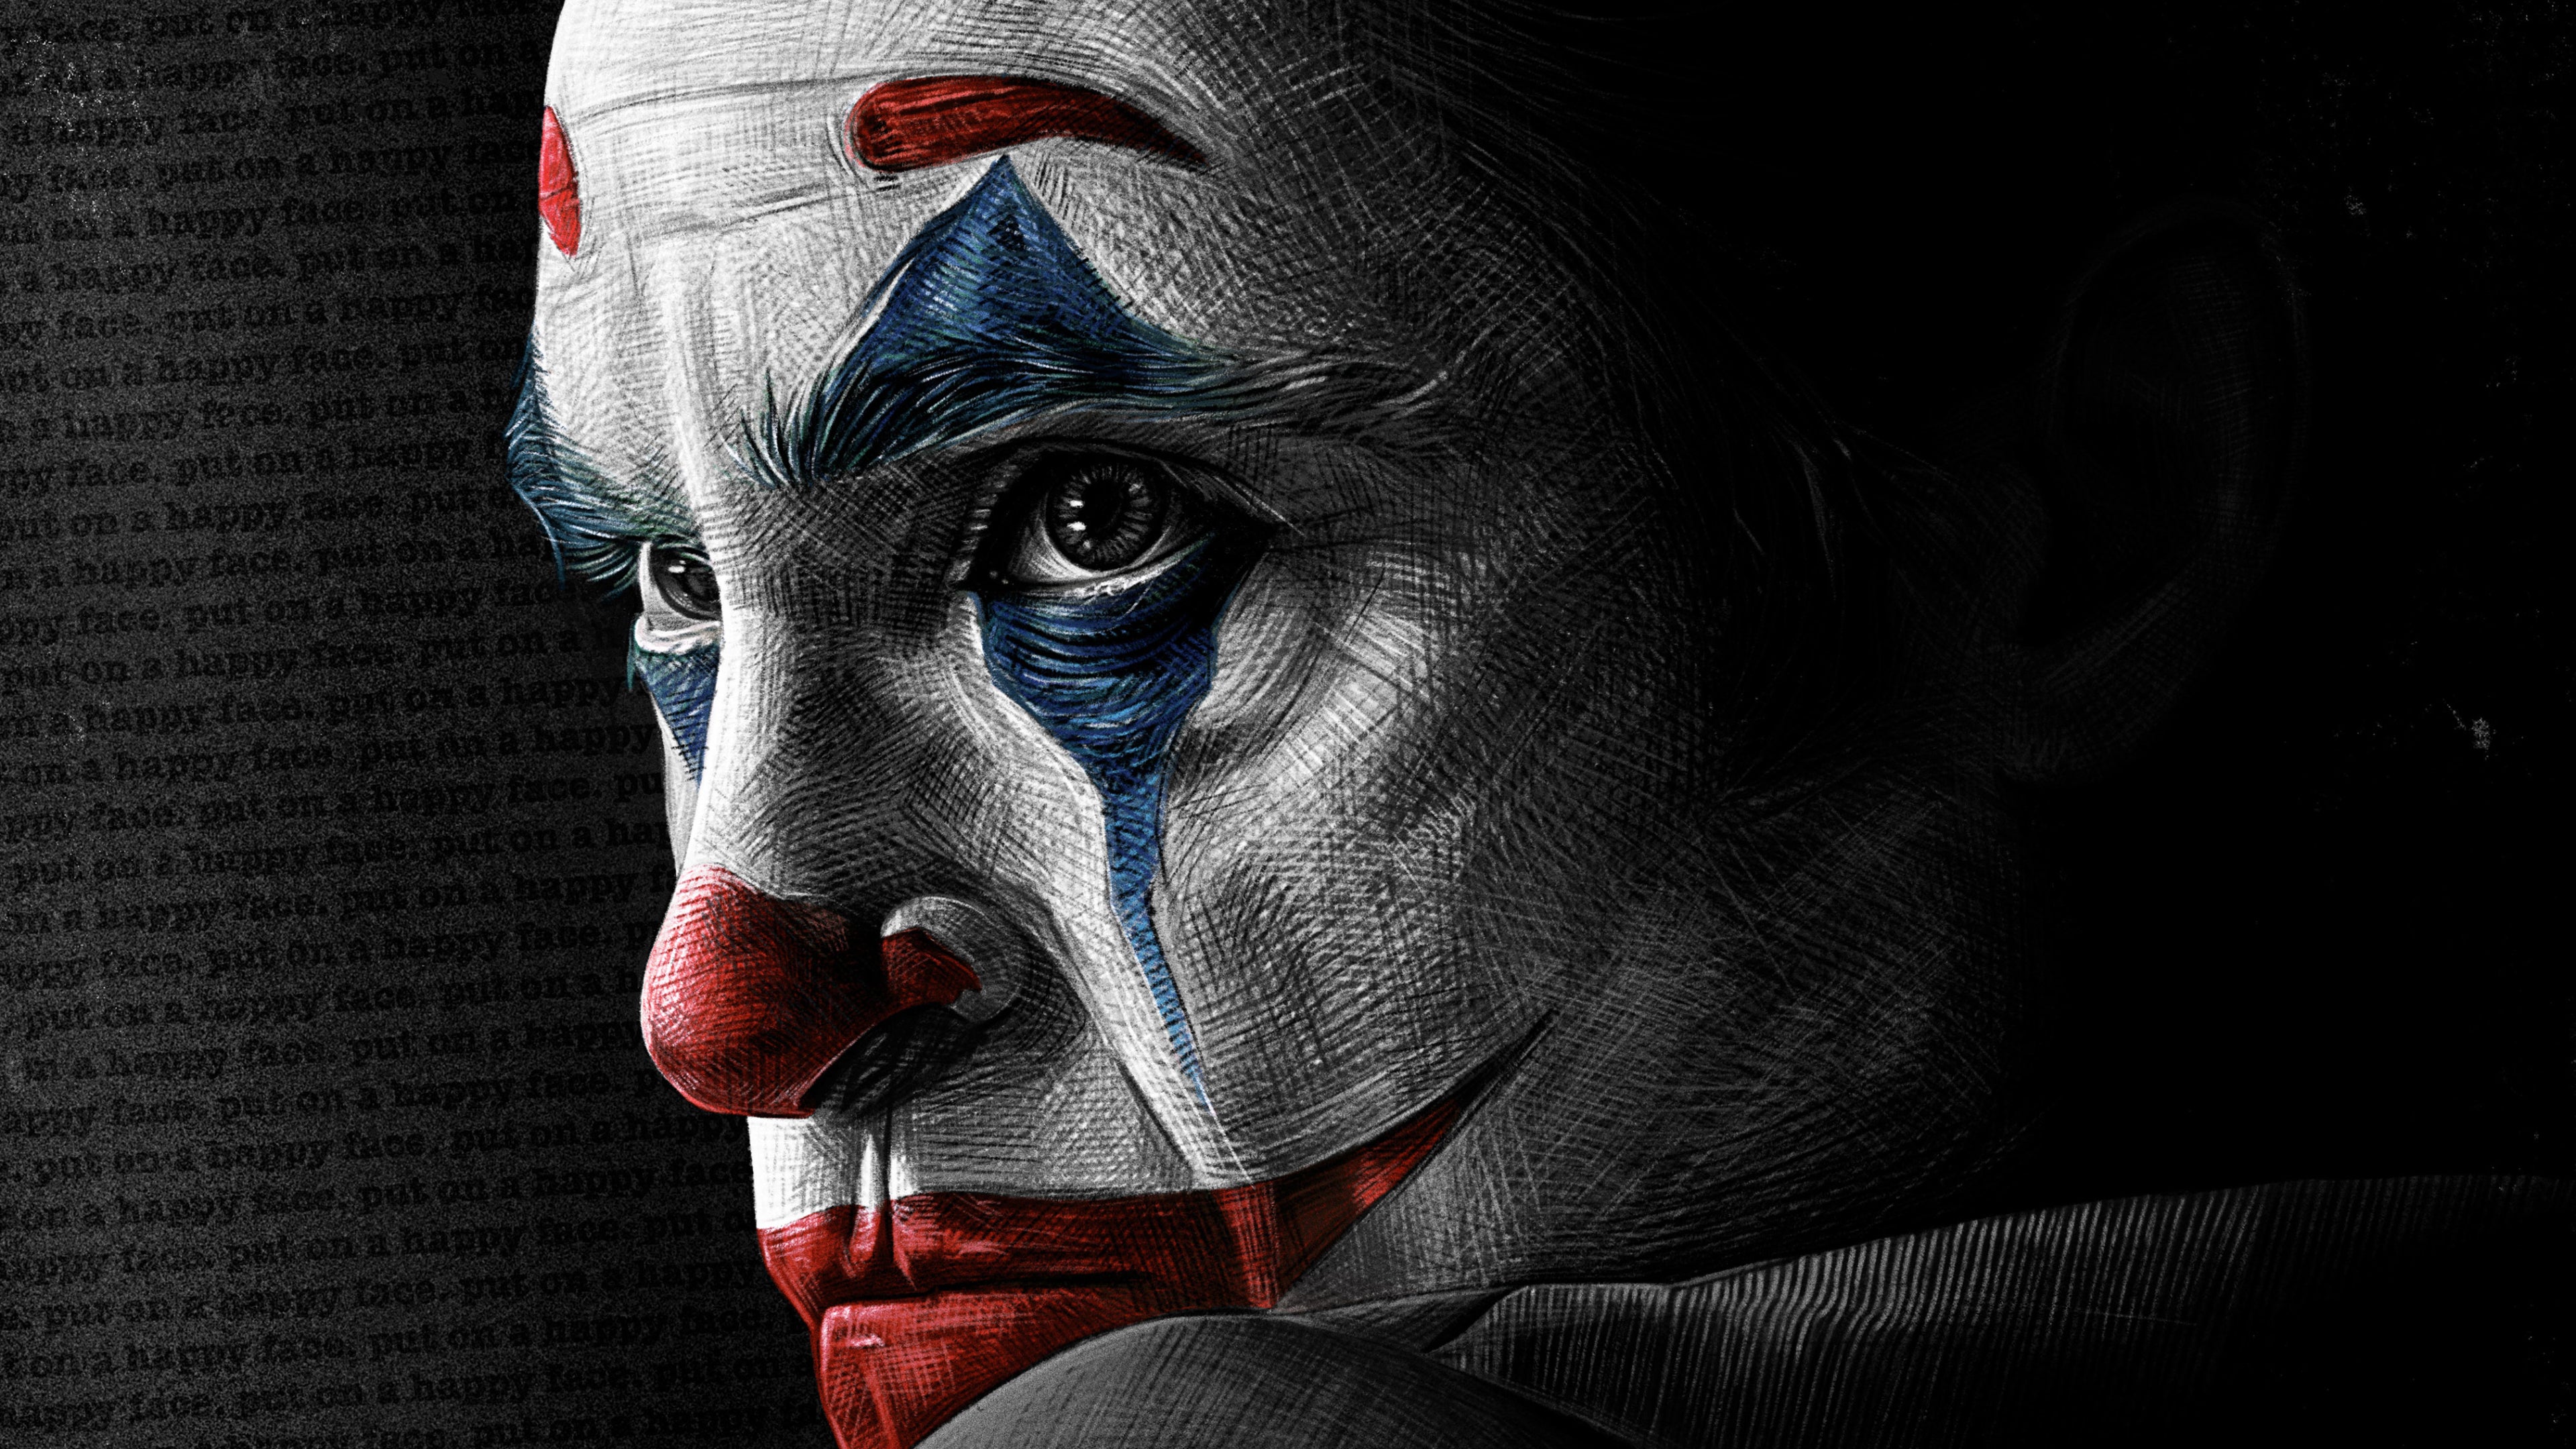 Joaquin Phoenix as Joker 4K wallpaper